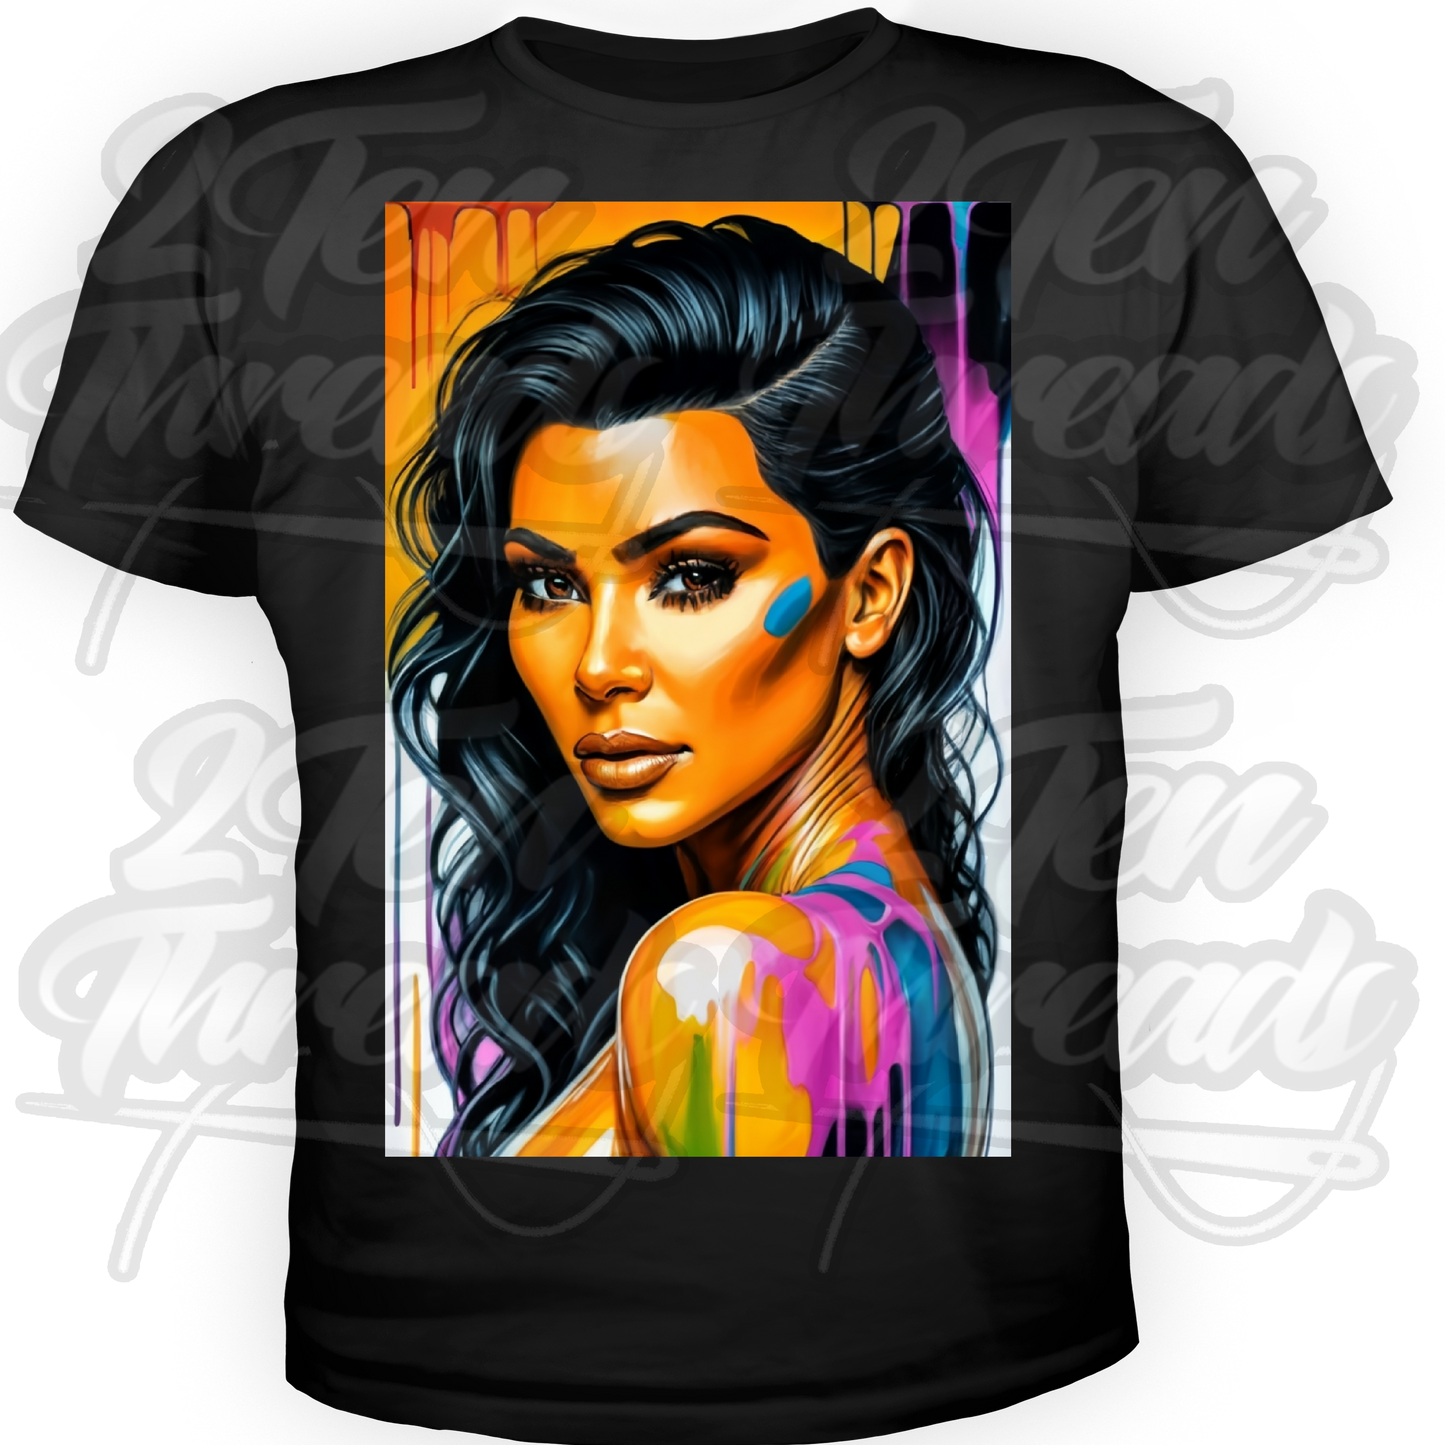 Kim Kardashian Drip Swag shirt